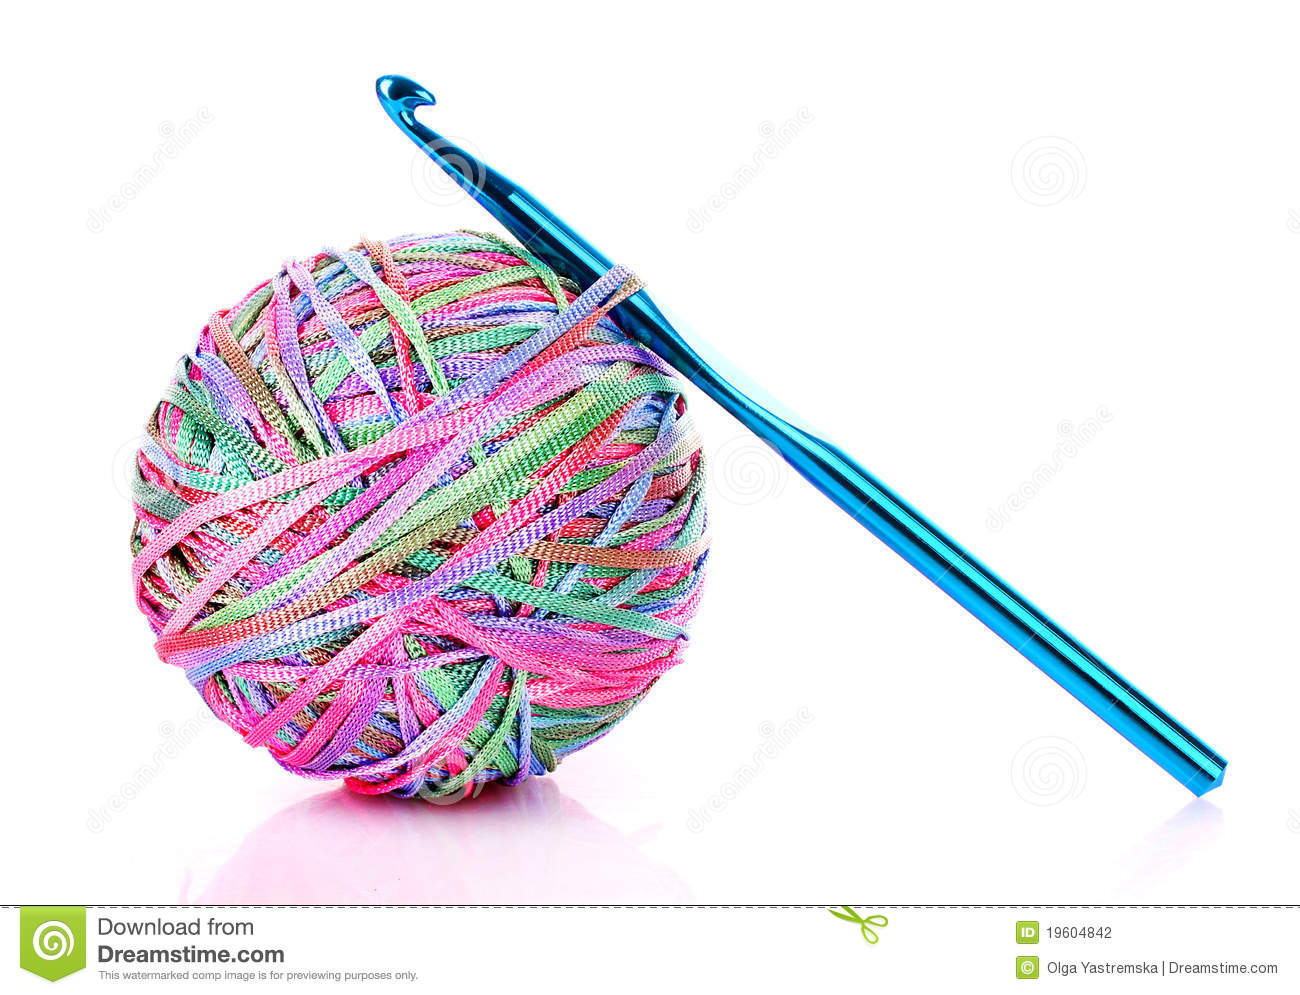 Seivo   Image   Crochet Hook Clip Art   Seivo Web Search Engine